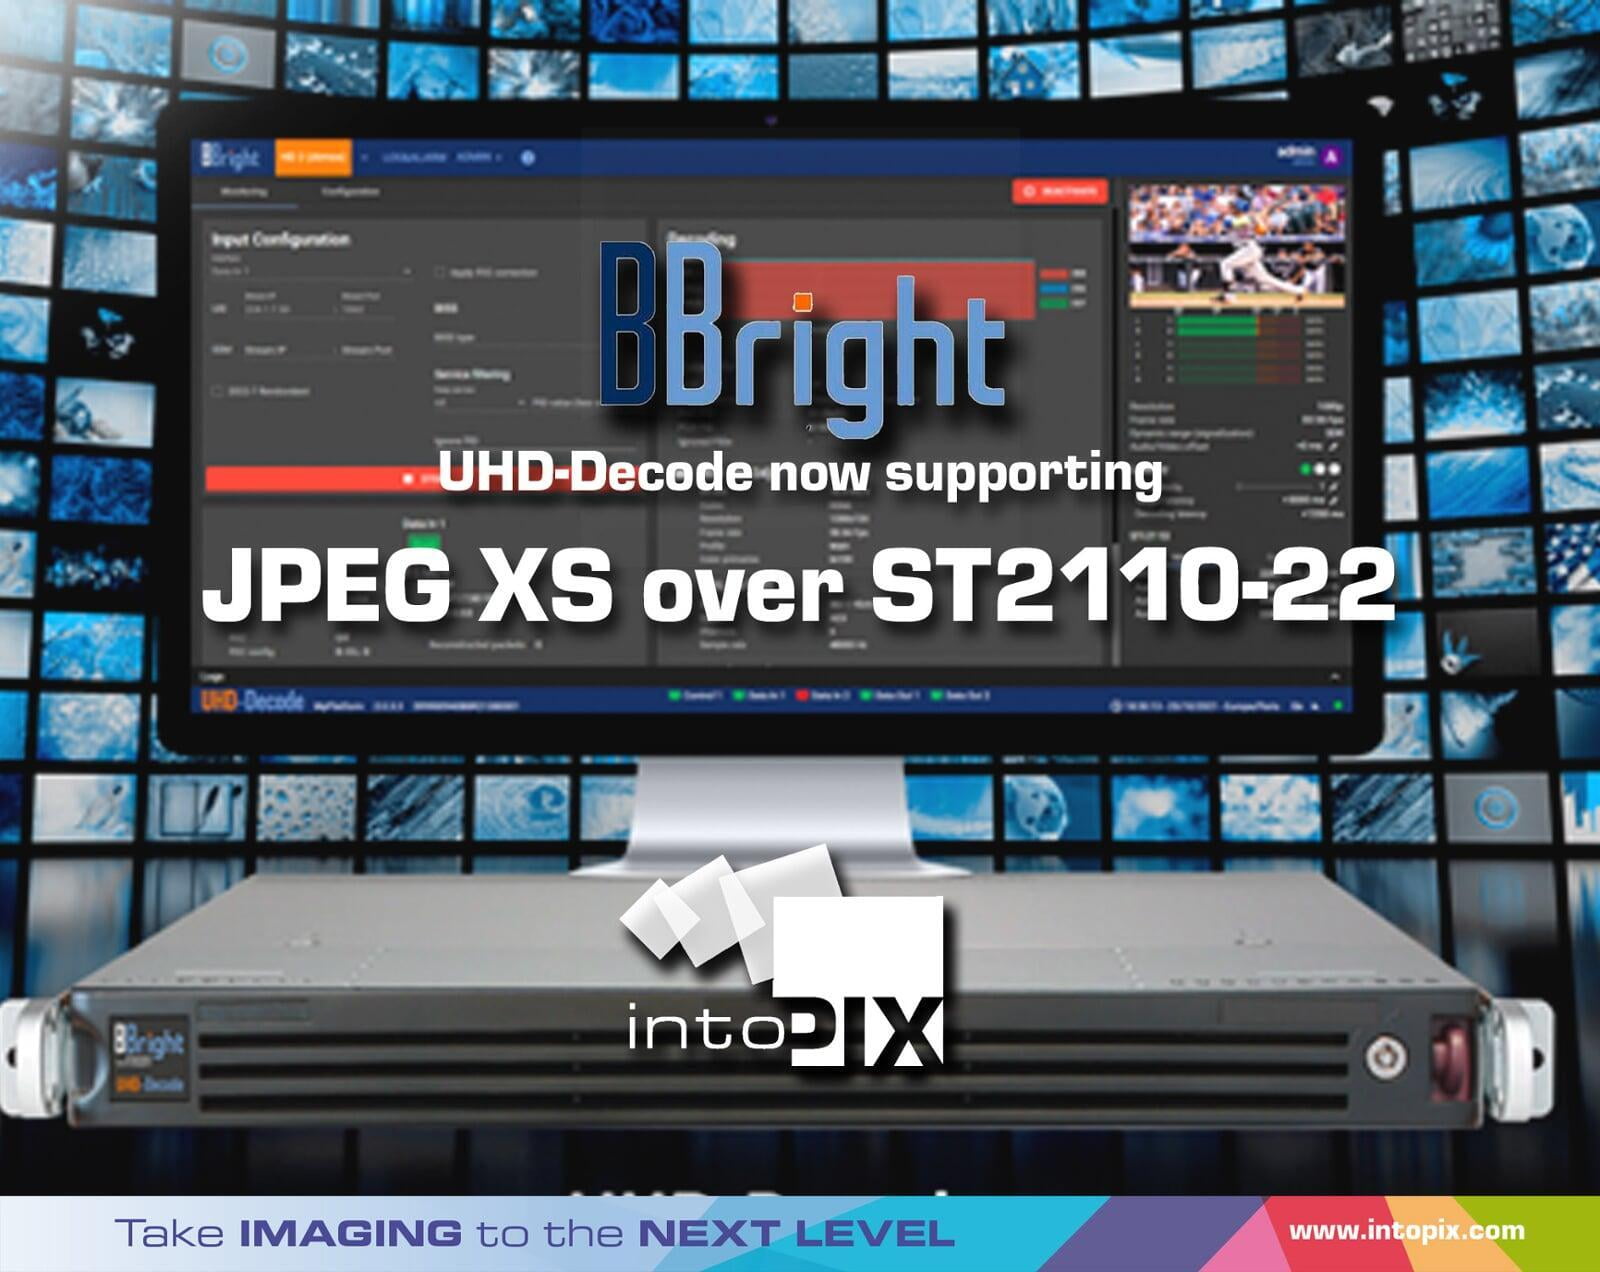 BBright UHD 미디어 게이트웨이는 intoPIX JPEG XS 기술을 통합합니다. 